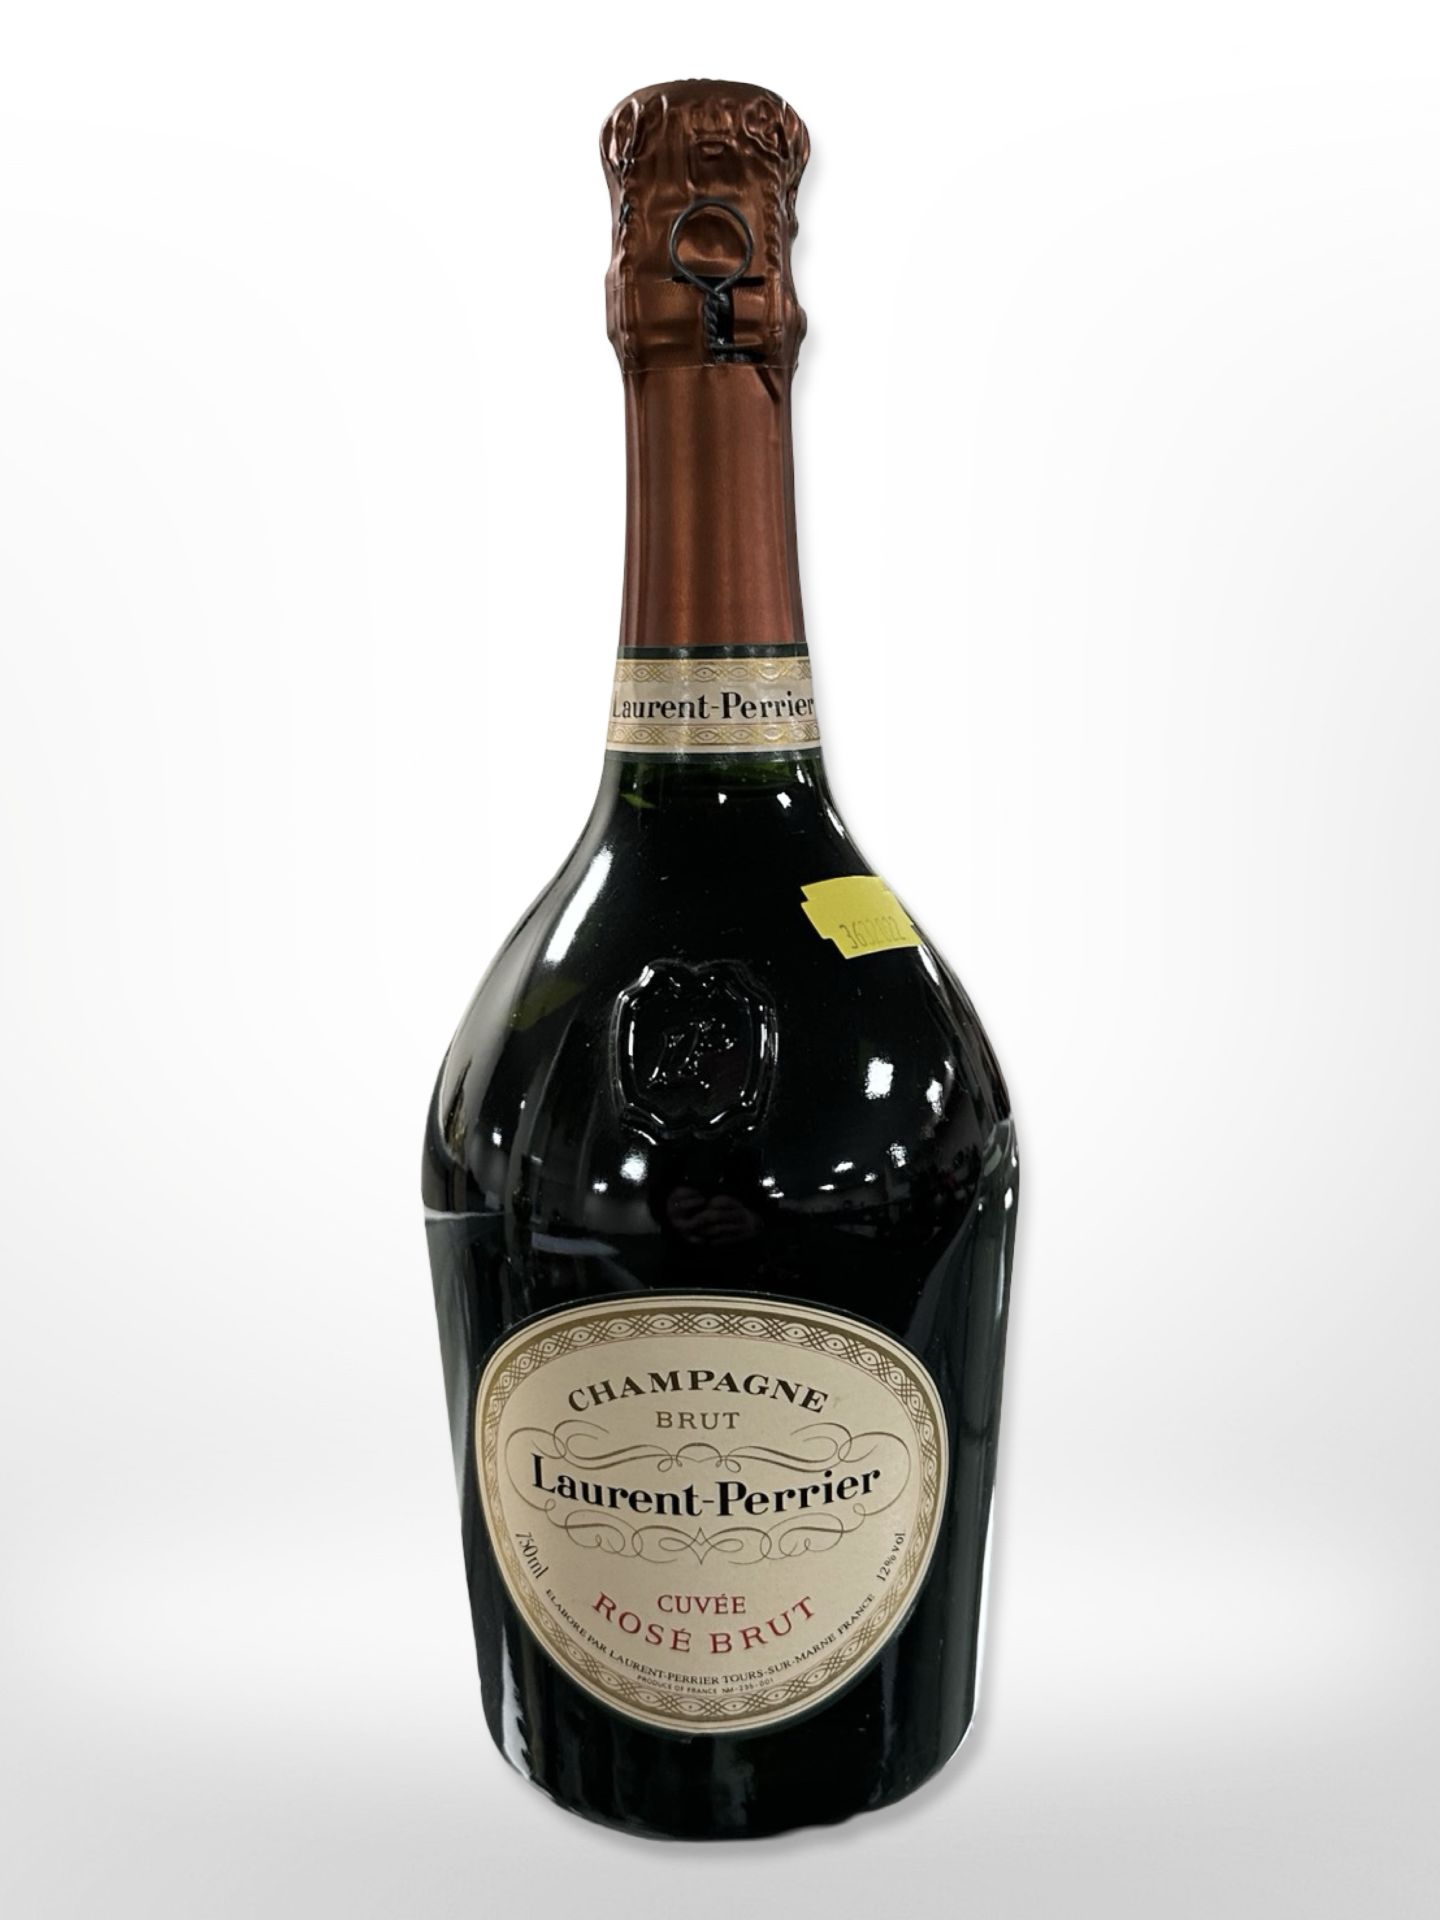 A bottle of Laurent-Perrier brut champagne rosé, 750ml, 12% vol.